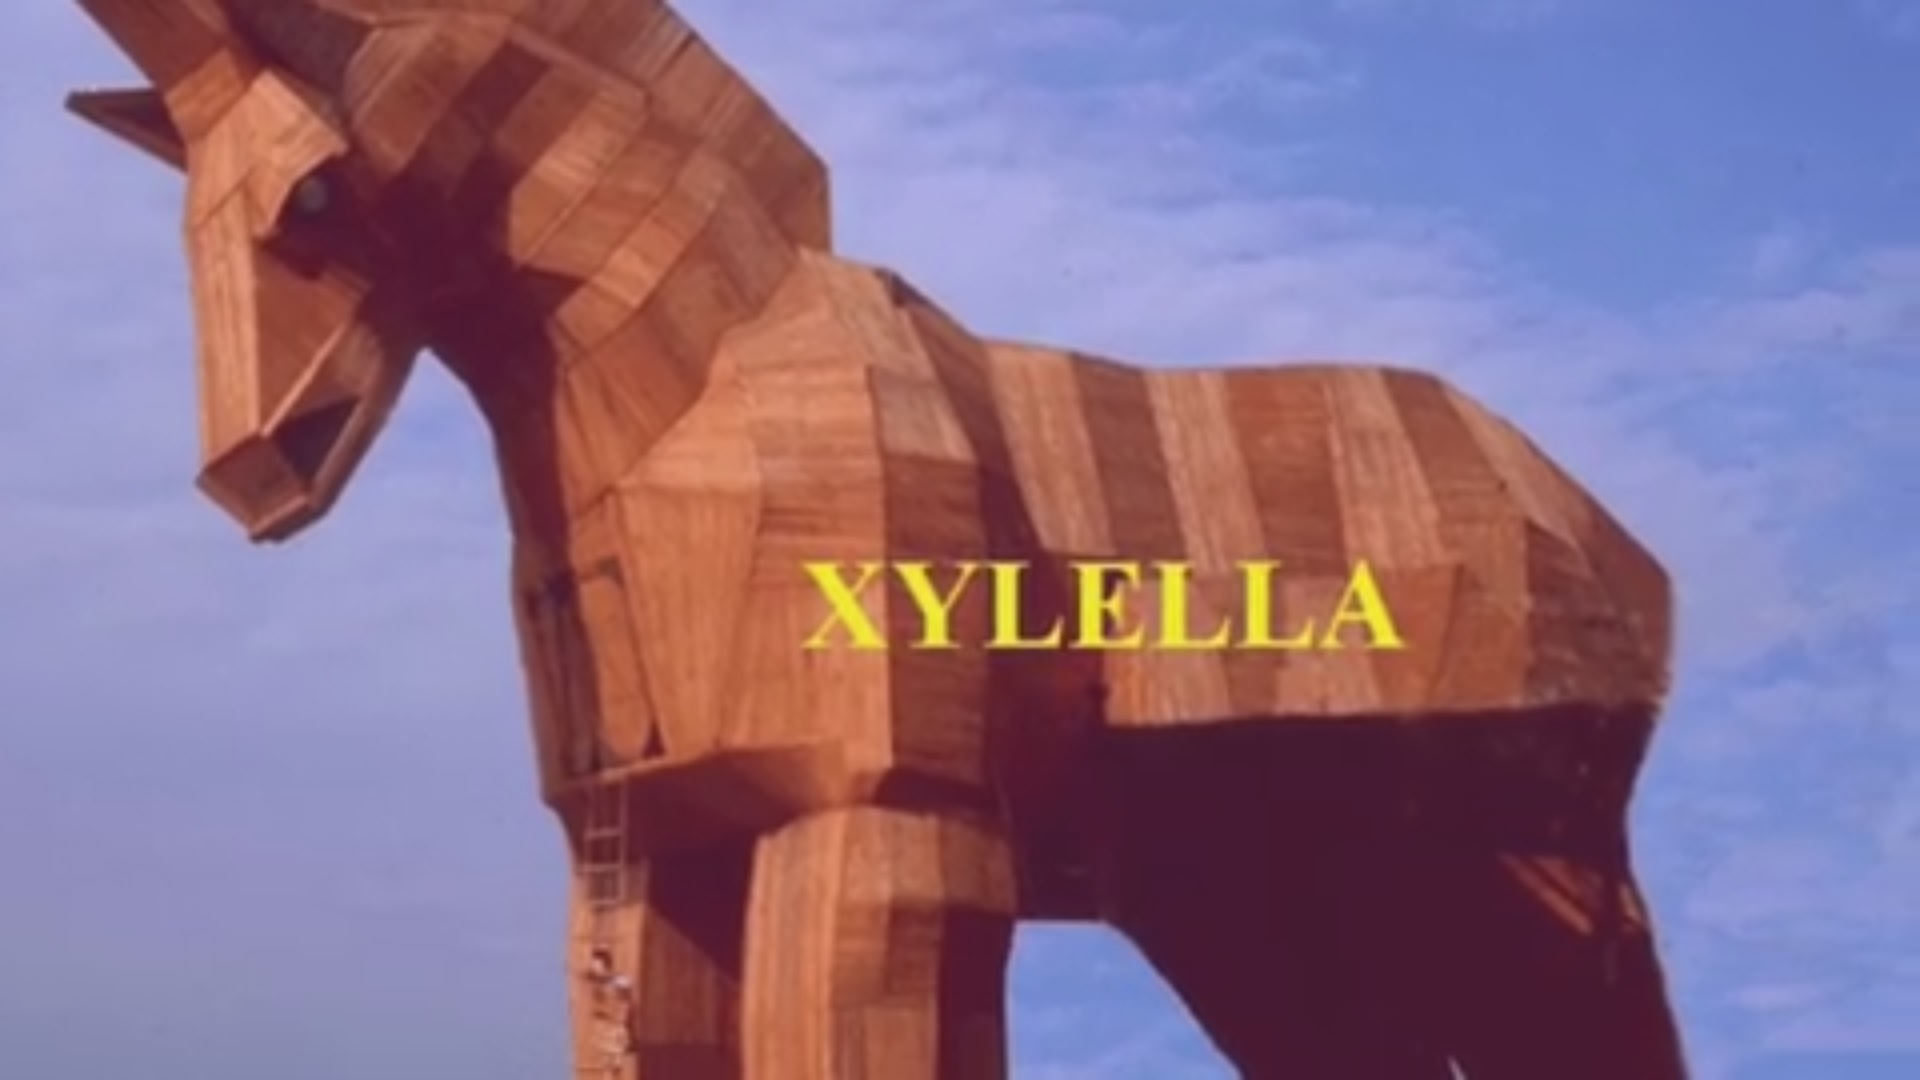 xylella